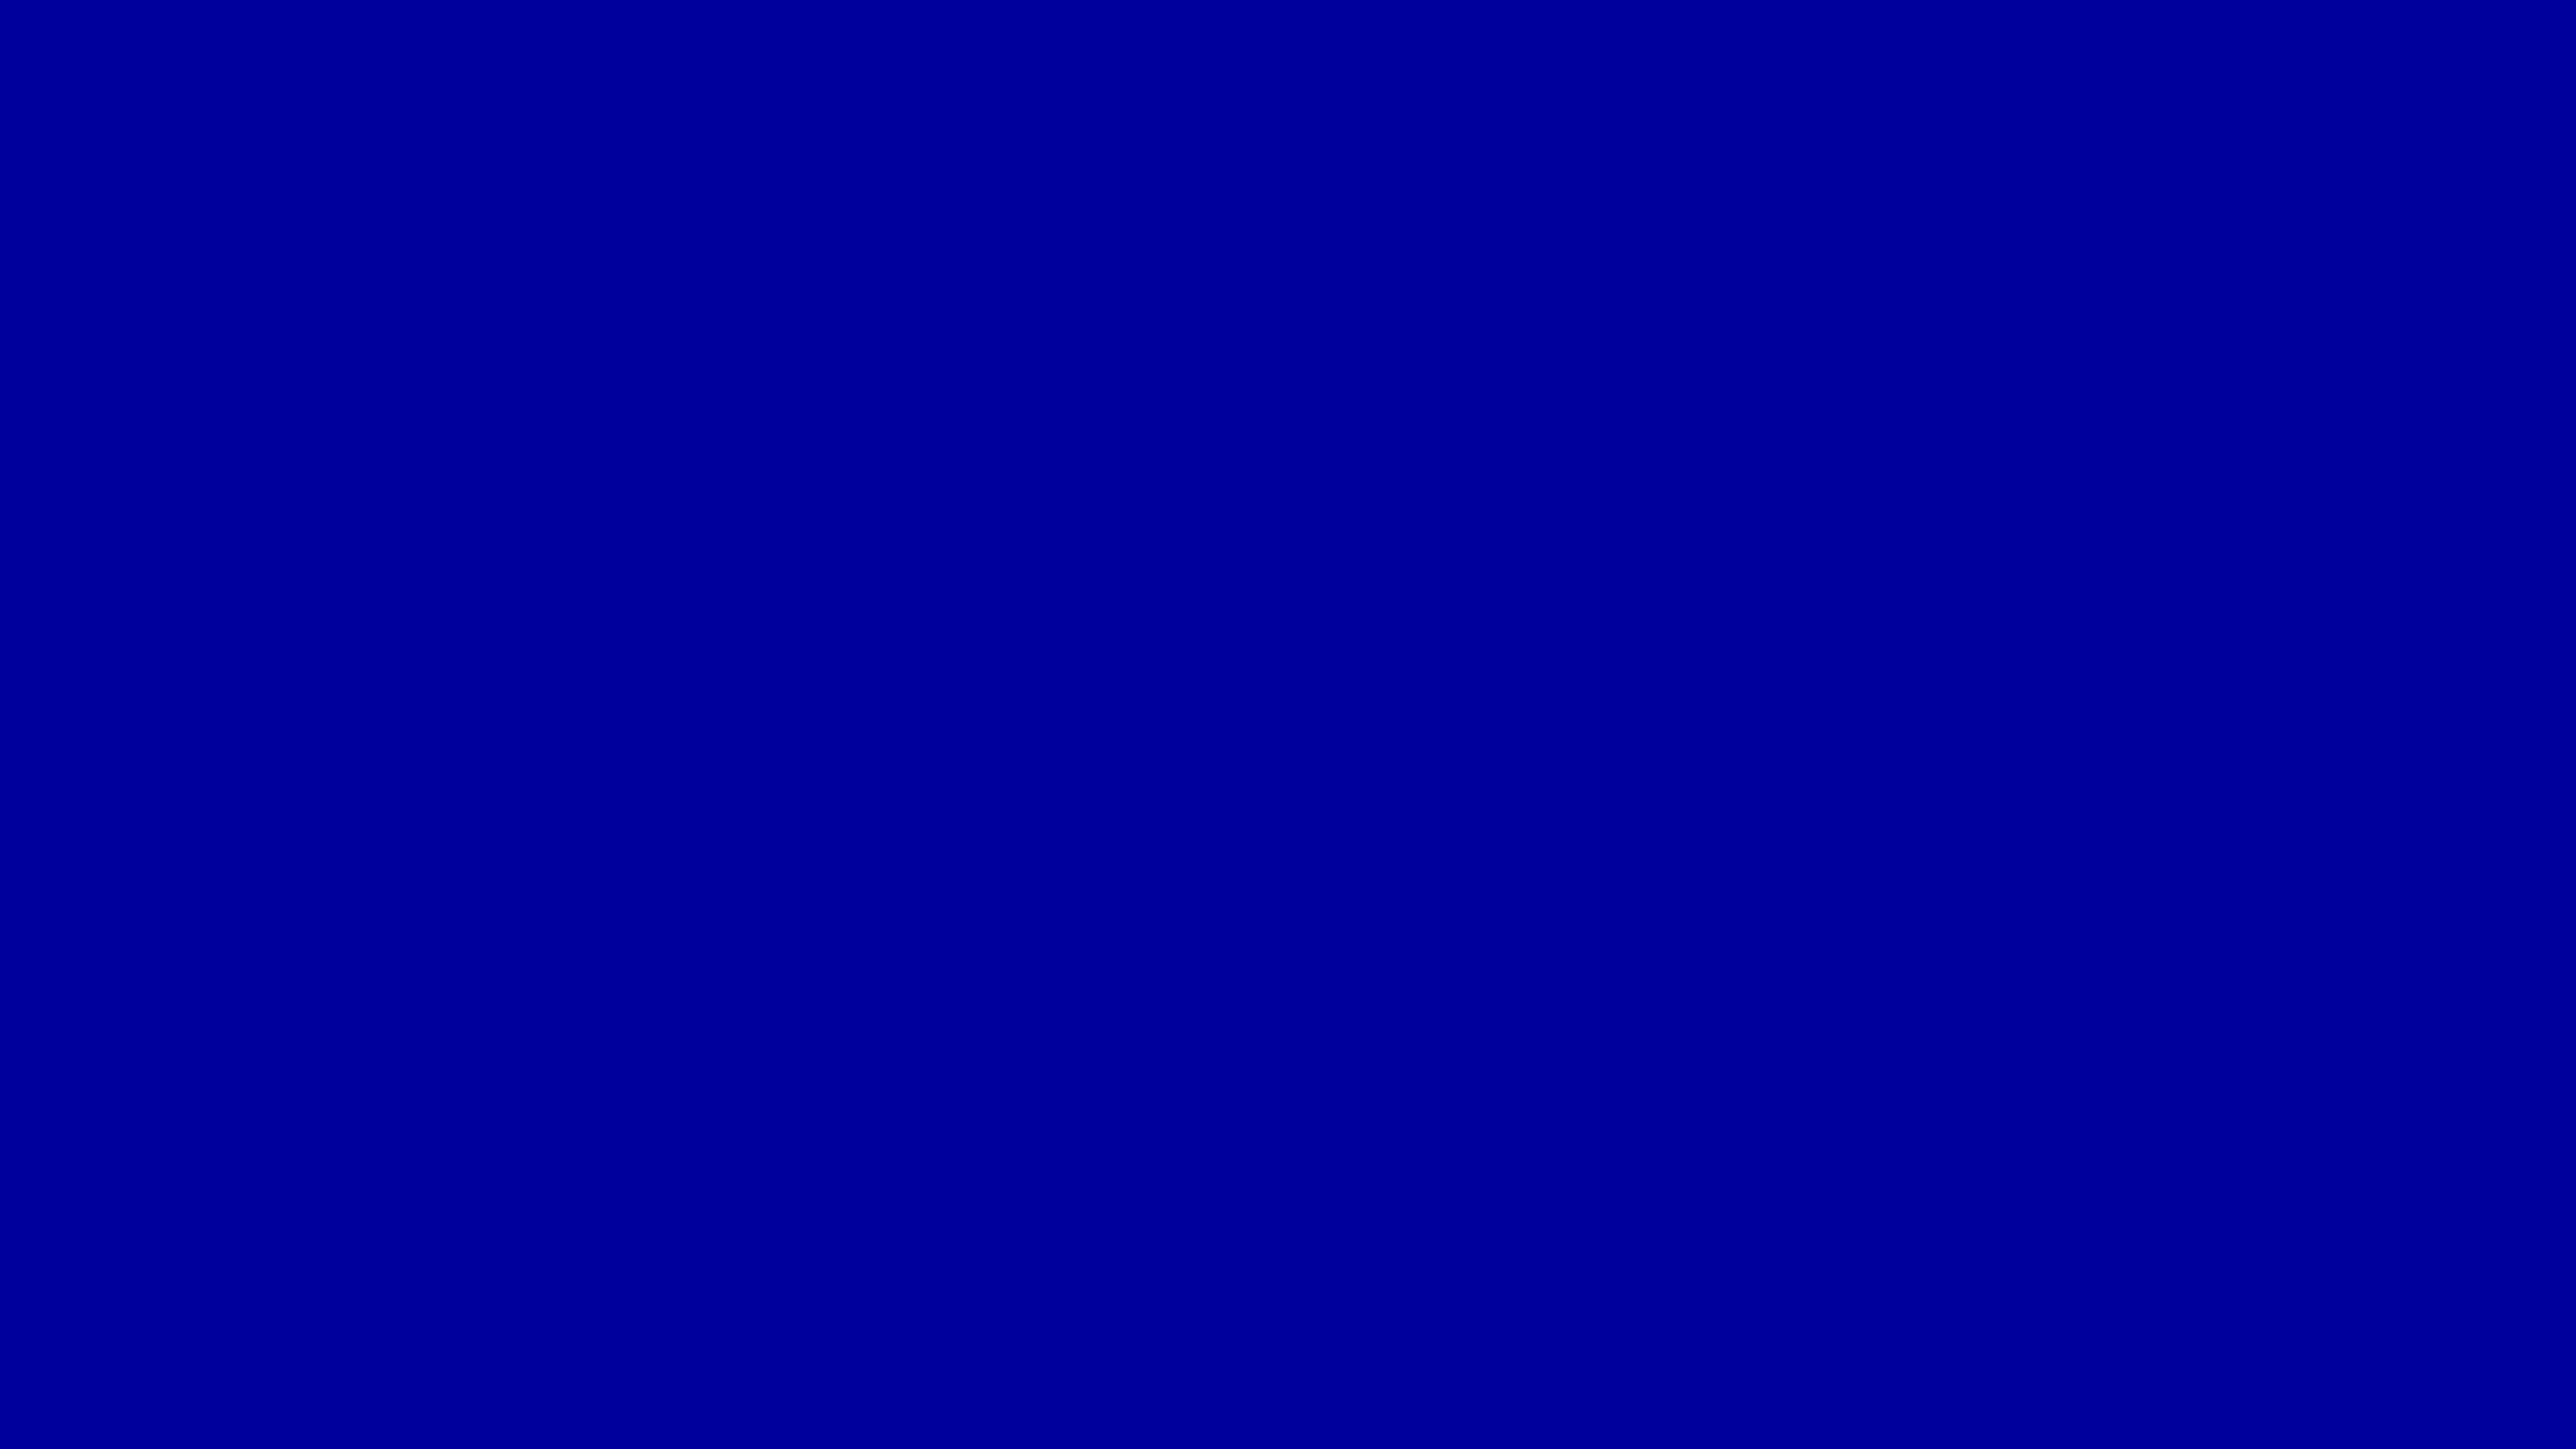 7680x4320 Duke Blue Solid Color Background